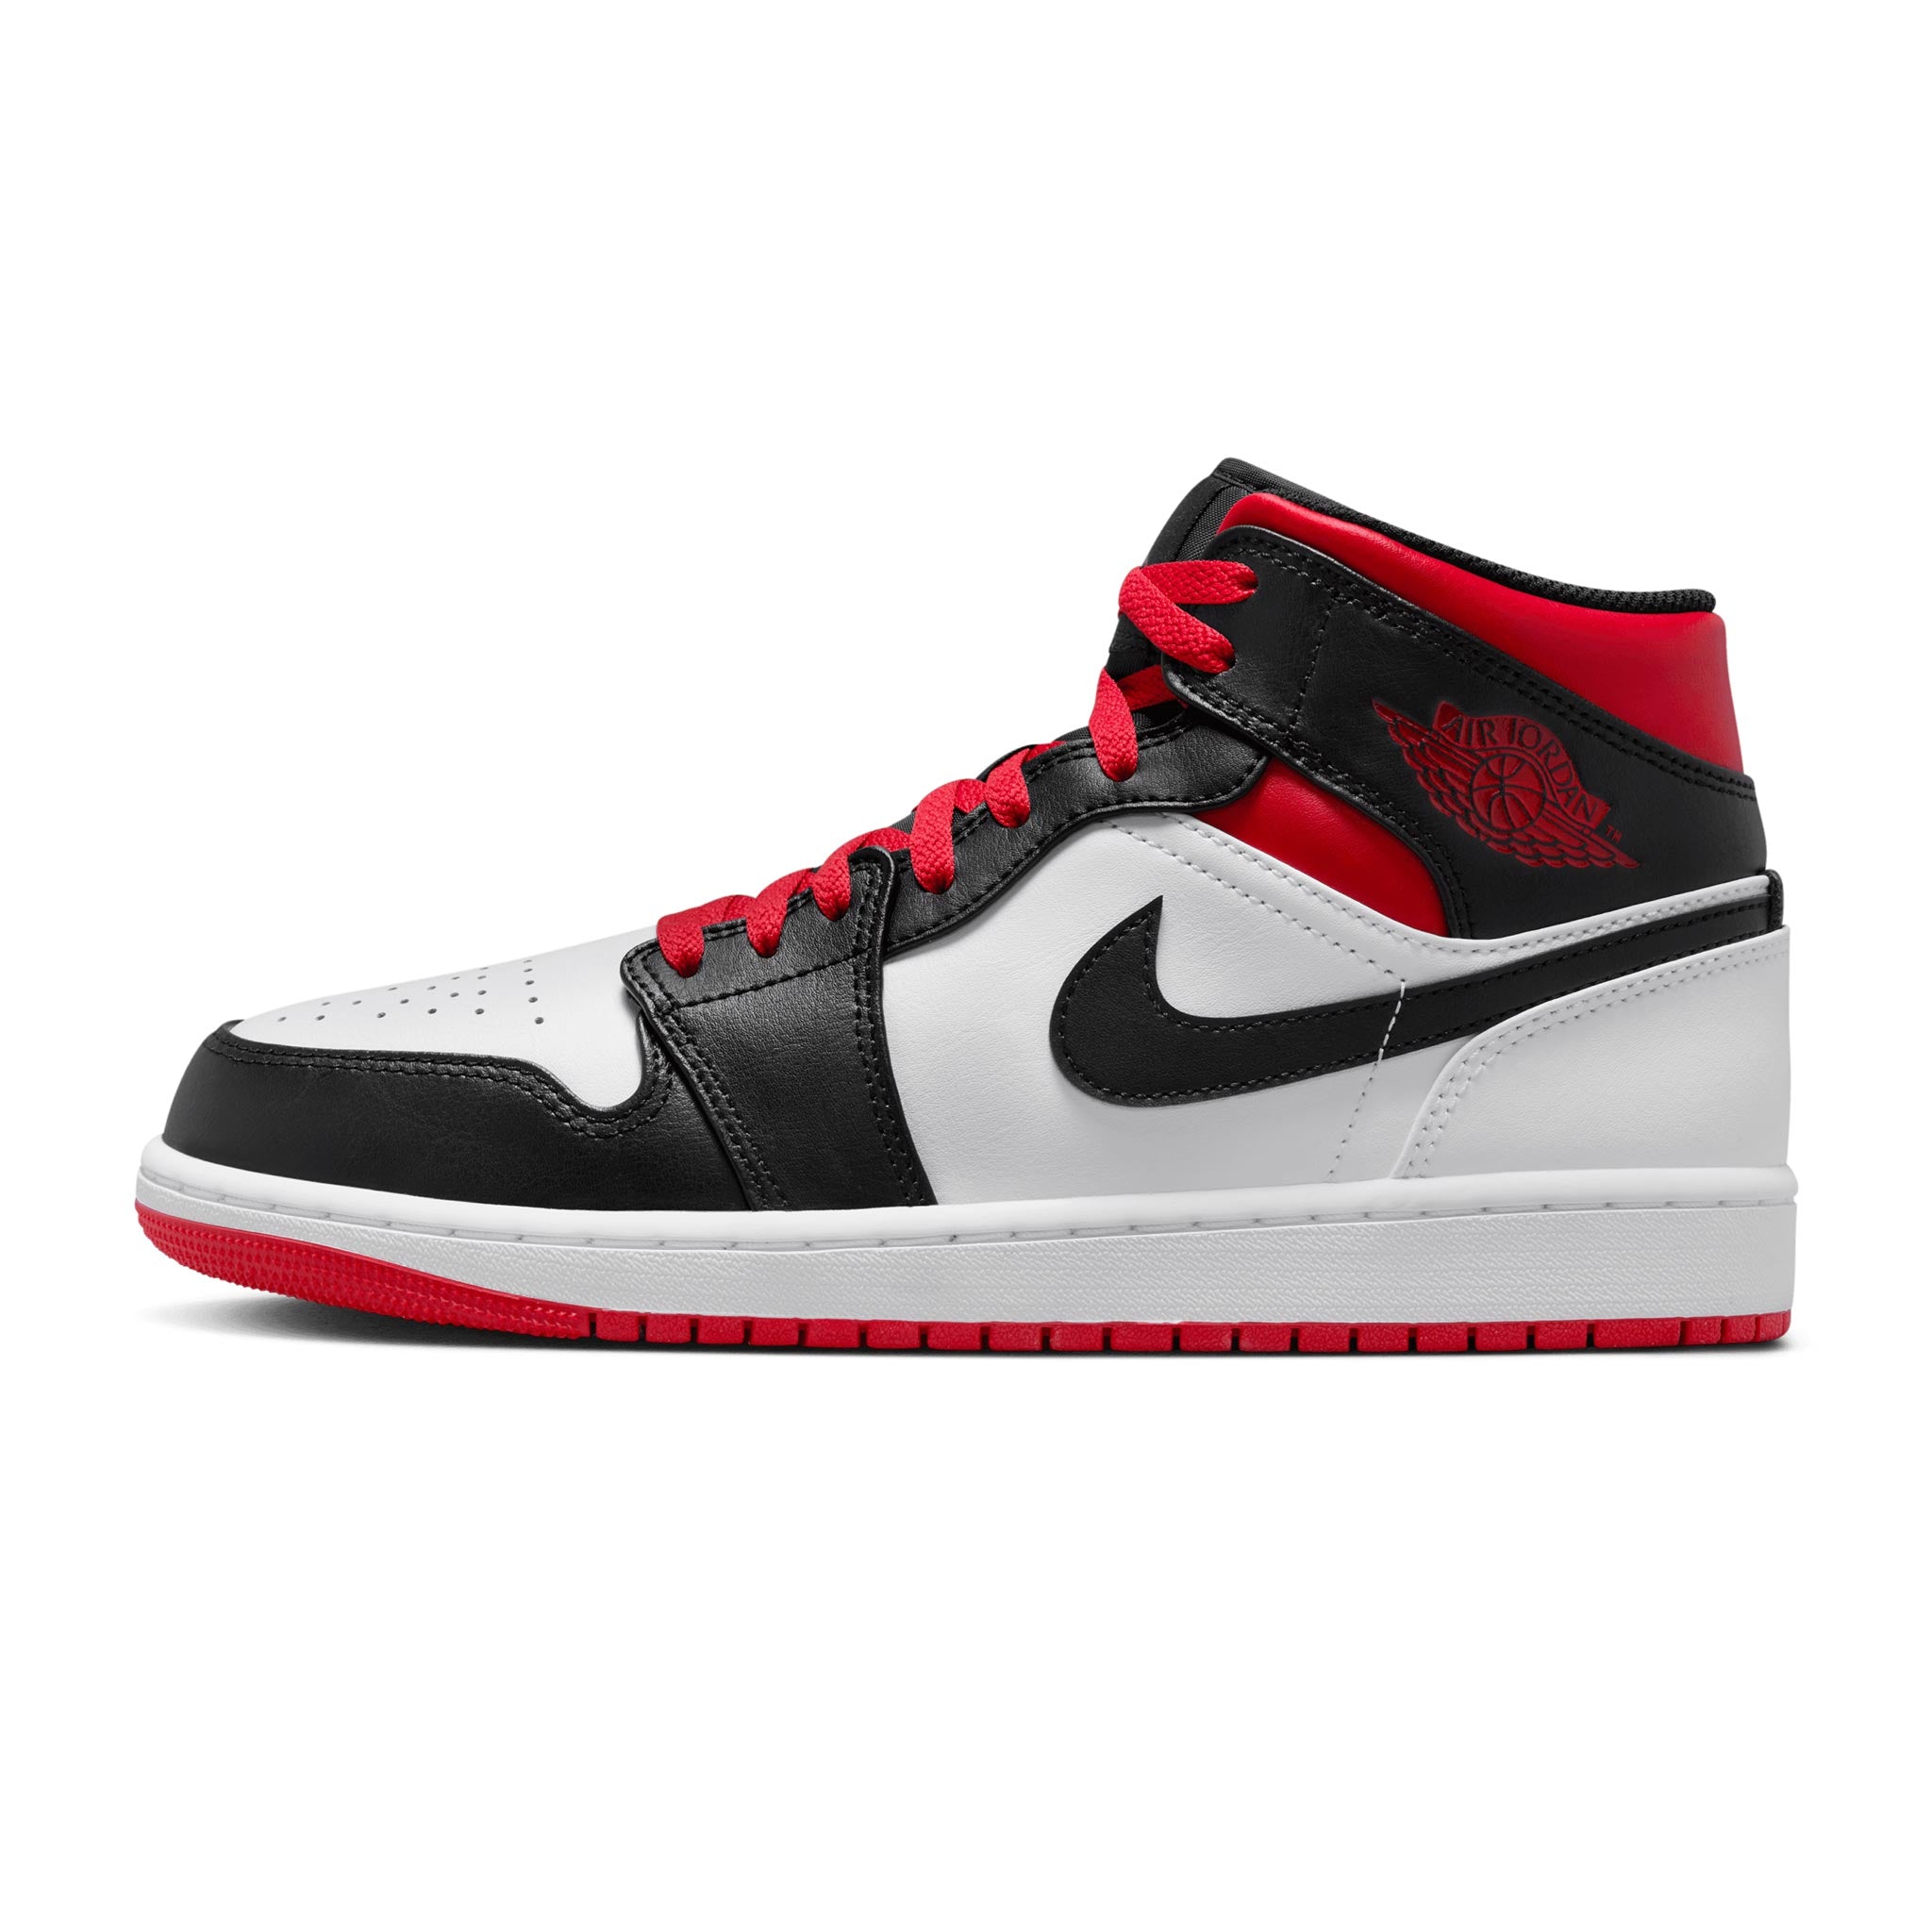 Newest Hot Selling Mens Jordan Hydro Retro 4 705163-011 Black White Sandals Slippers